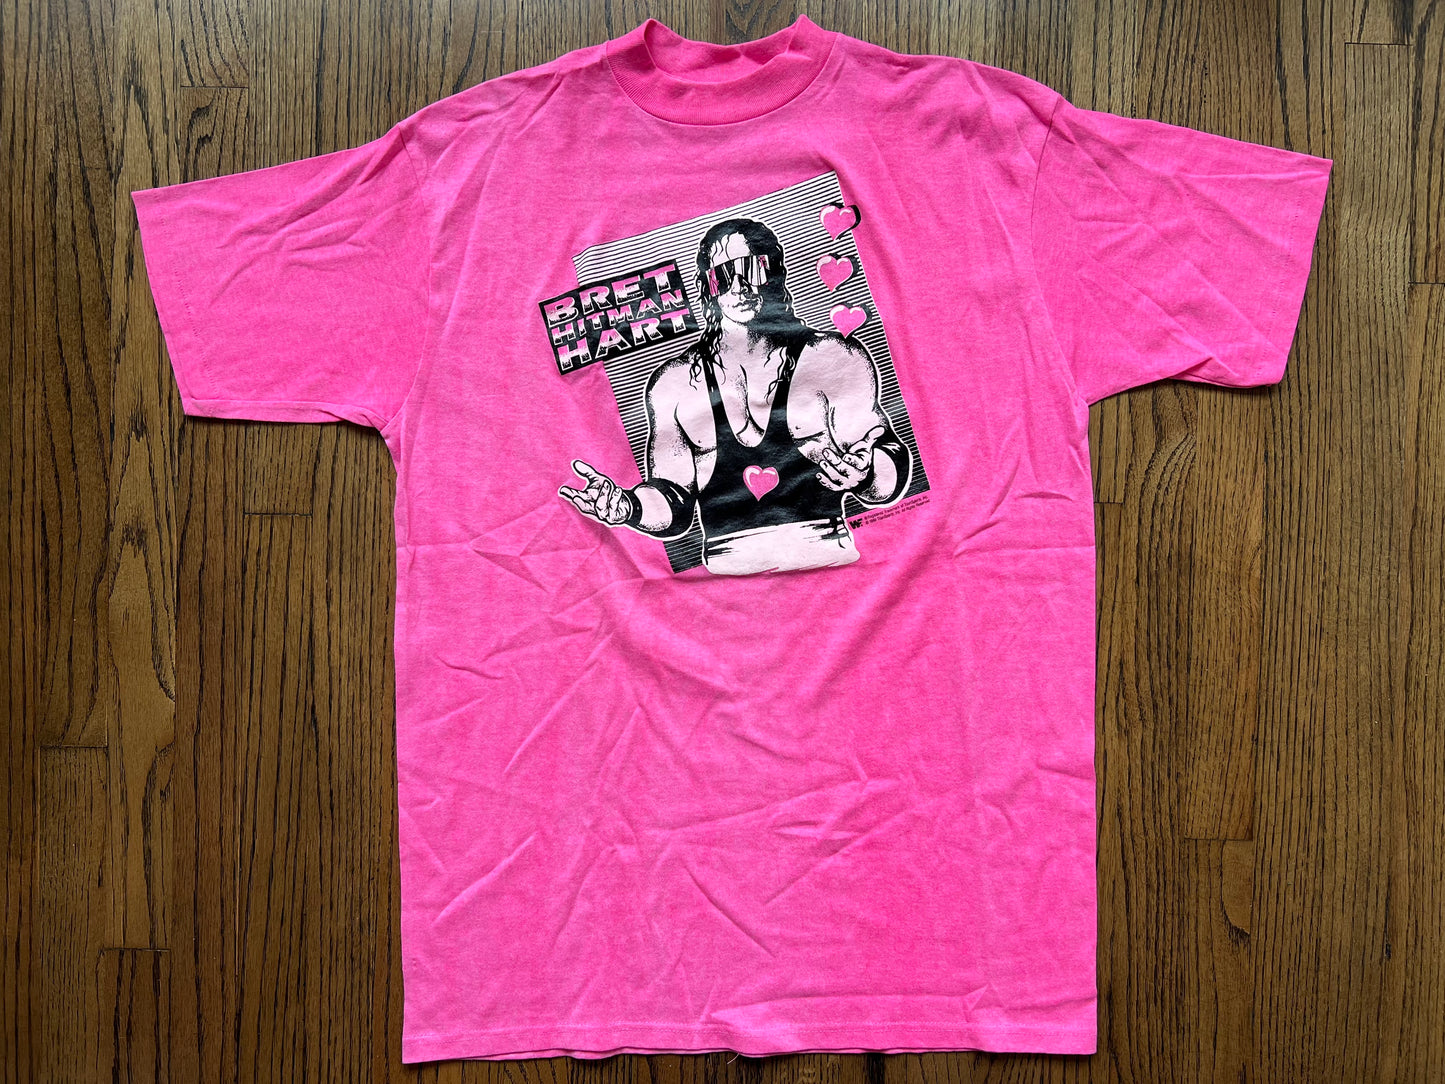 1990 WWF Bret “The Hitman” Hart shirt